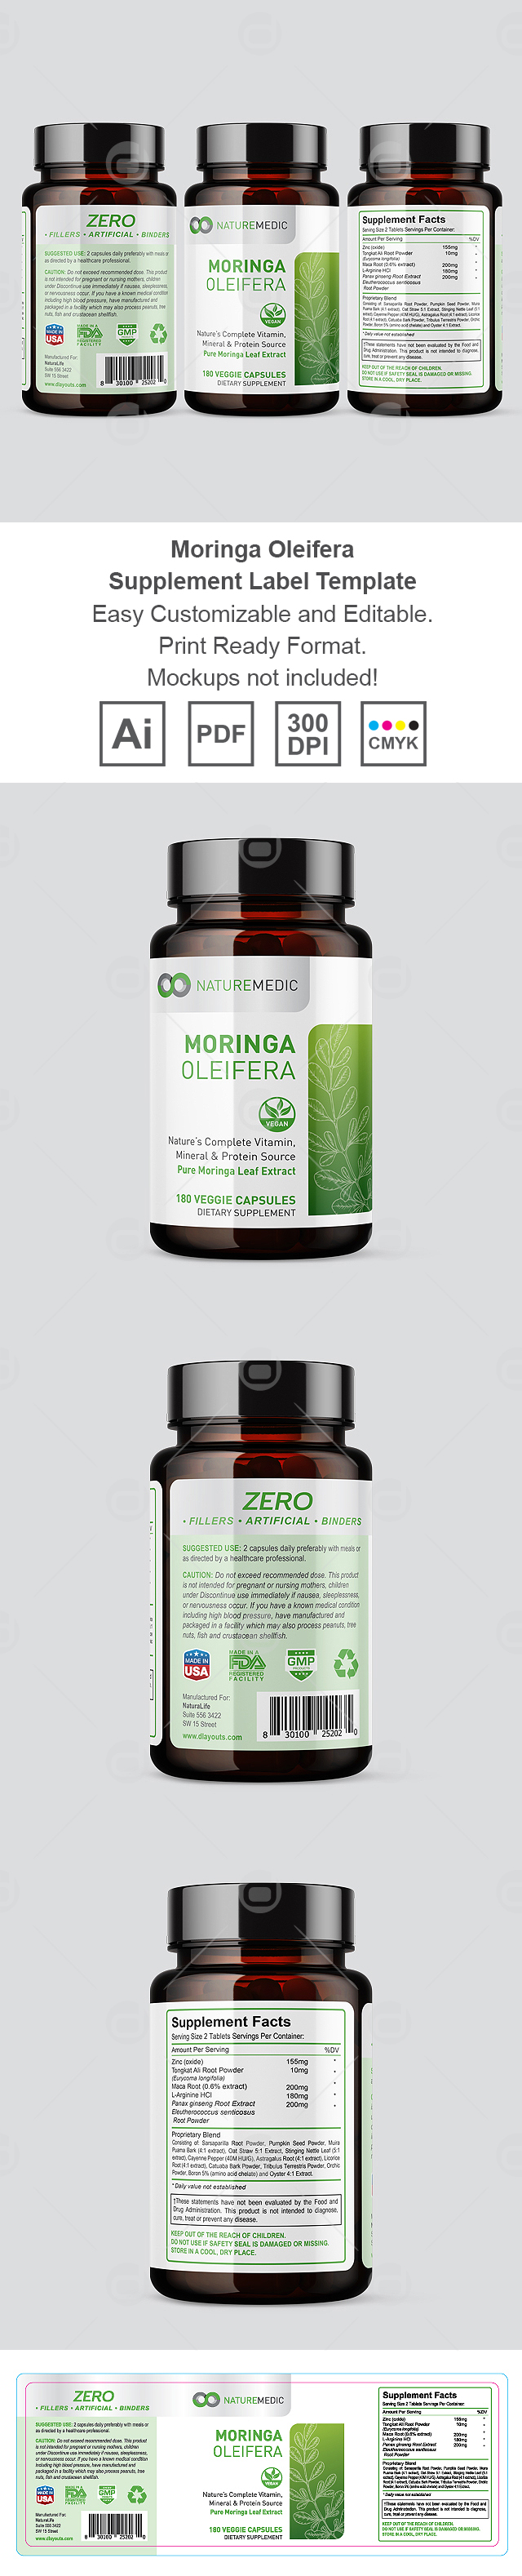 Moringa Oleifera Supplement Label Template